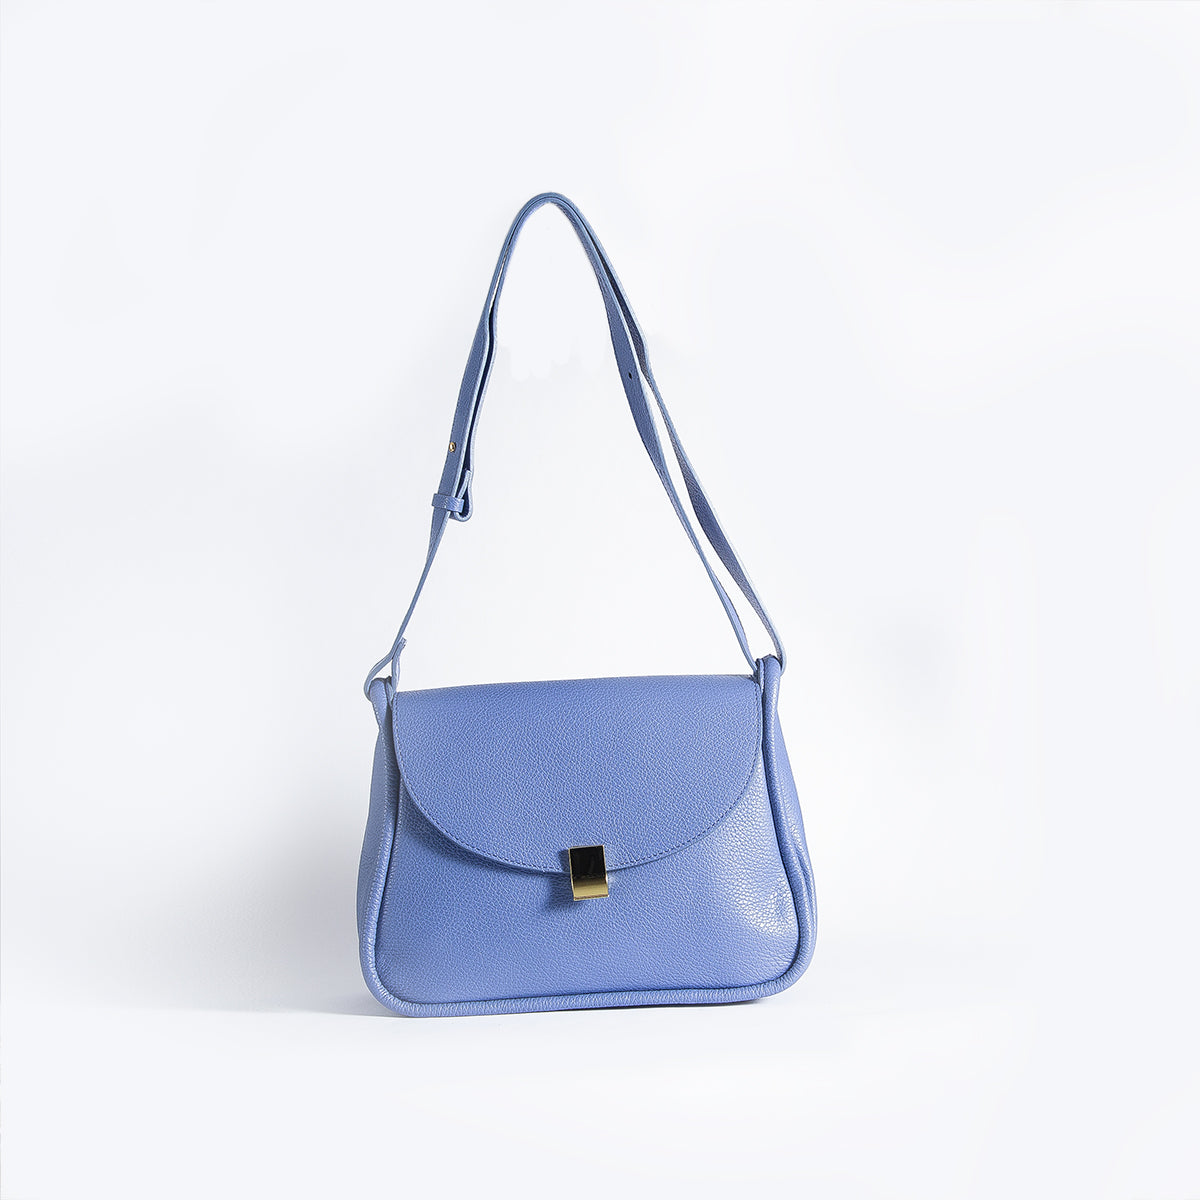 Enzo - handbags south Africa, handbags online, luxury handbags online |Vanto